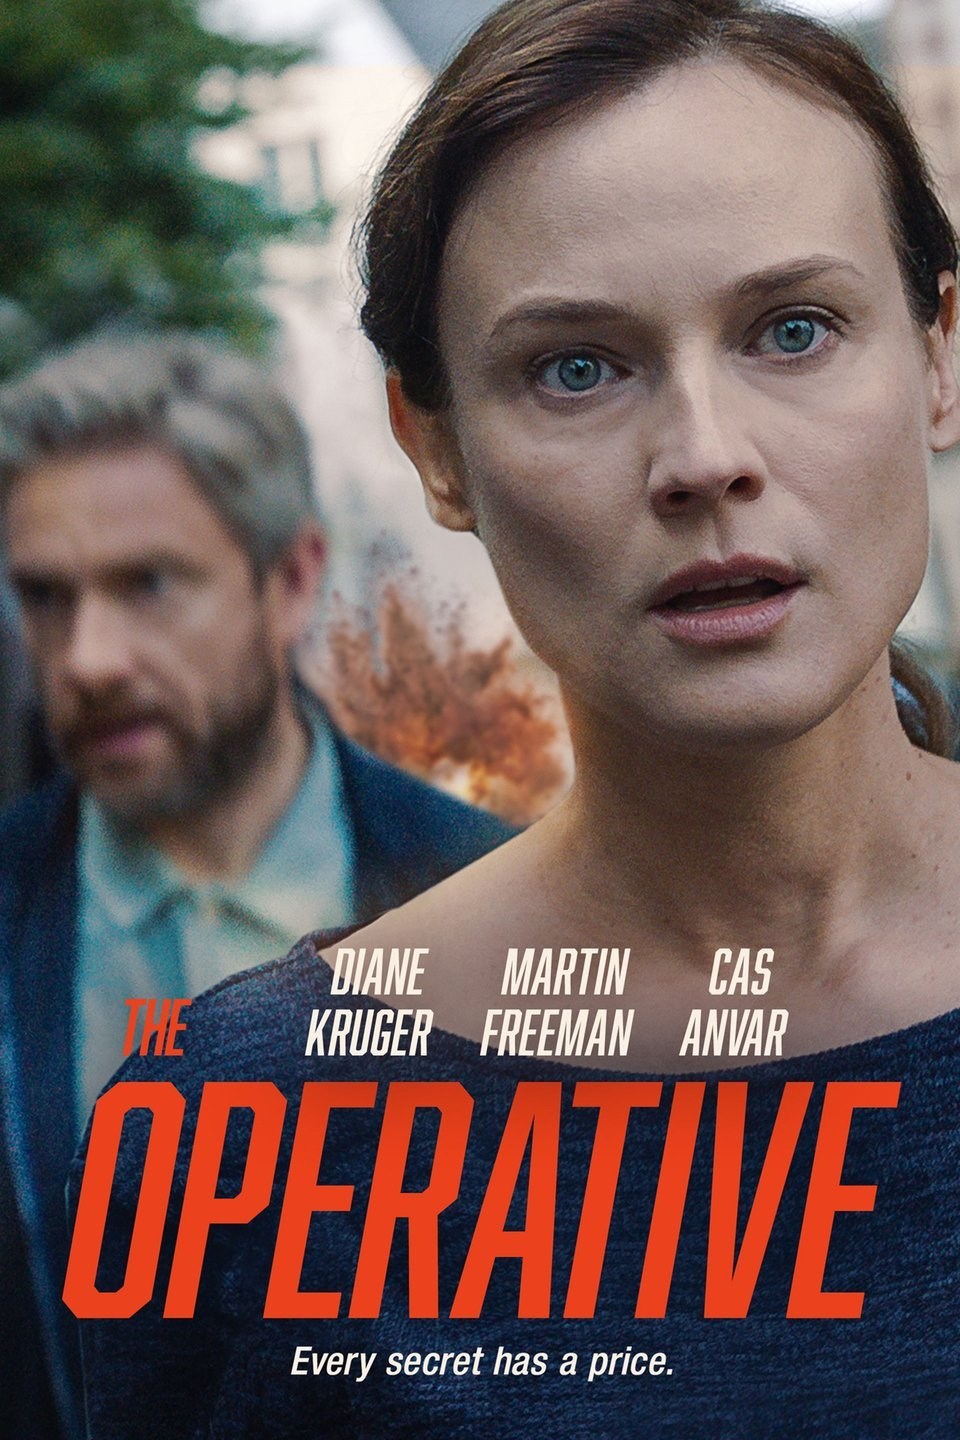 The Operative – Casus